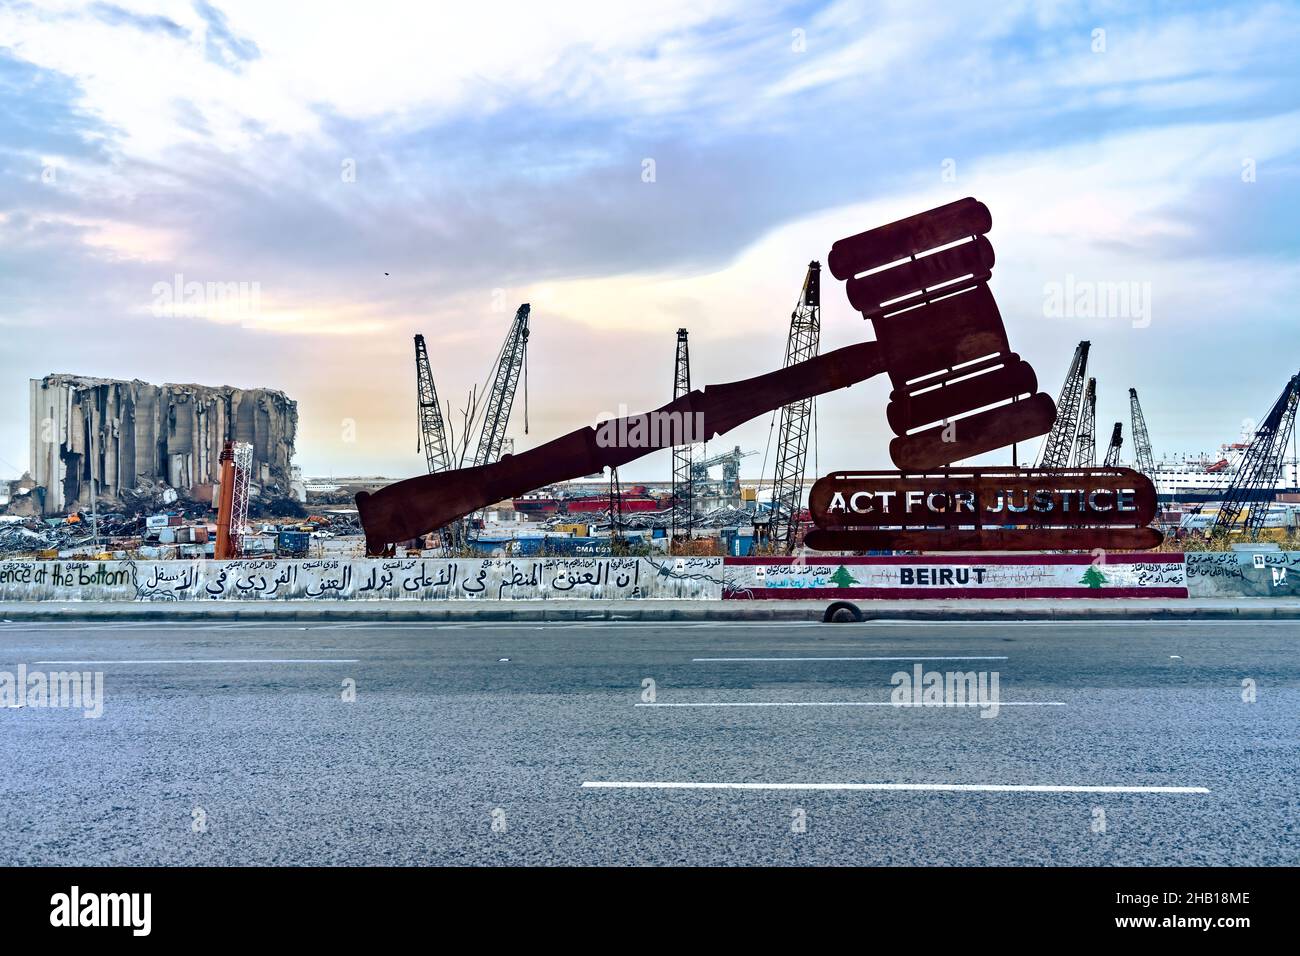 Beirut Lebanon - Dec 12 2021: Beirut Port Explosion site with recent memorials. Stock Photo